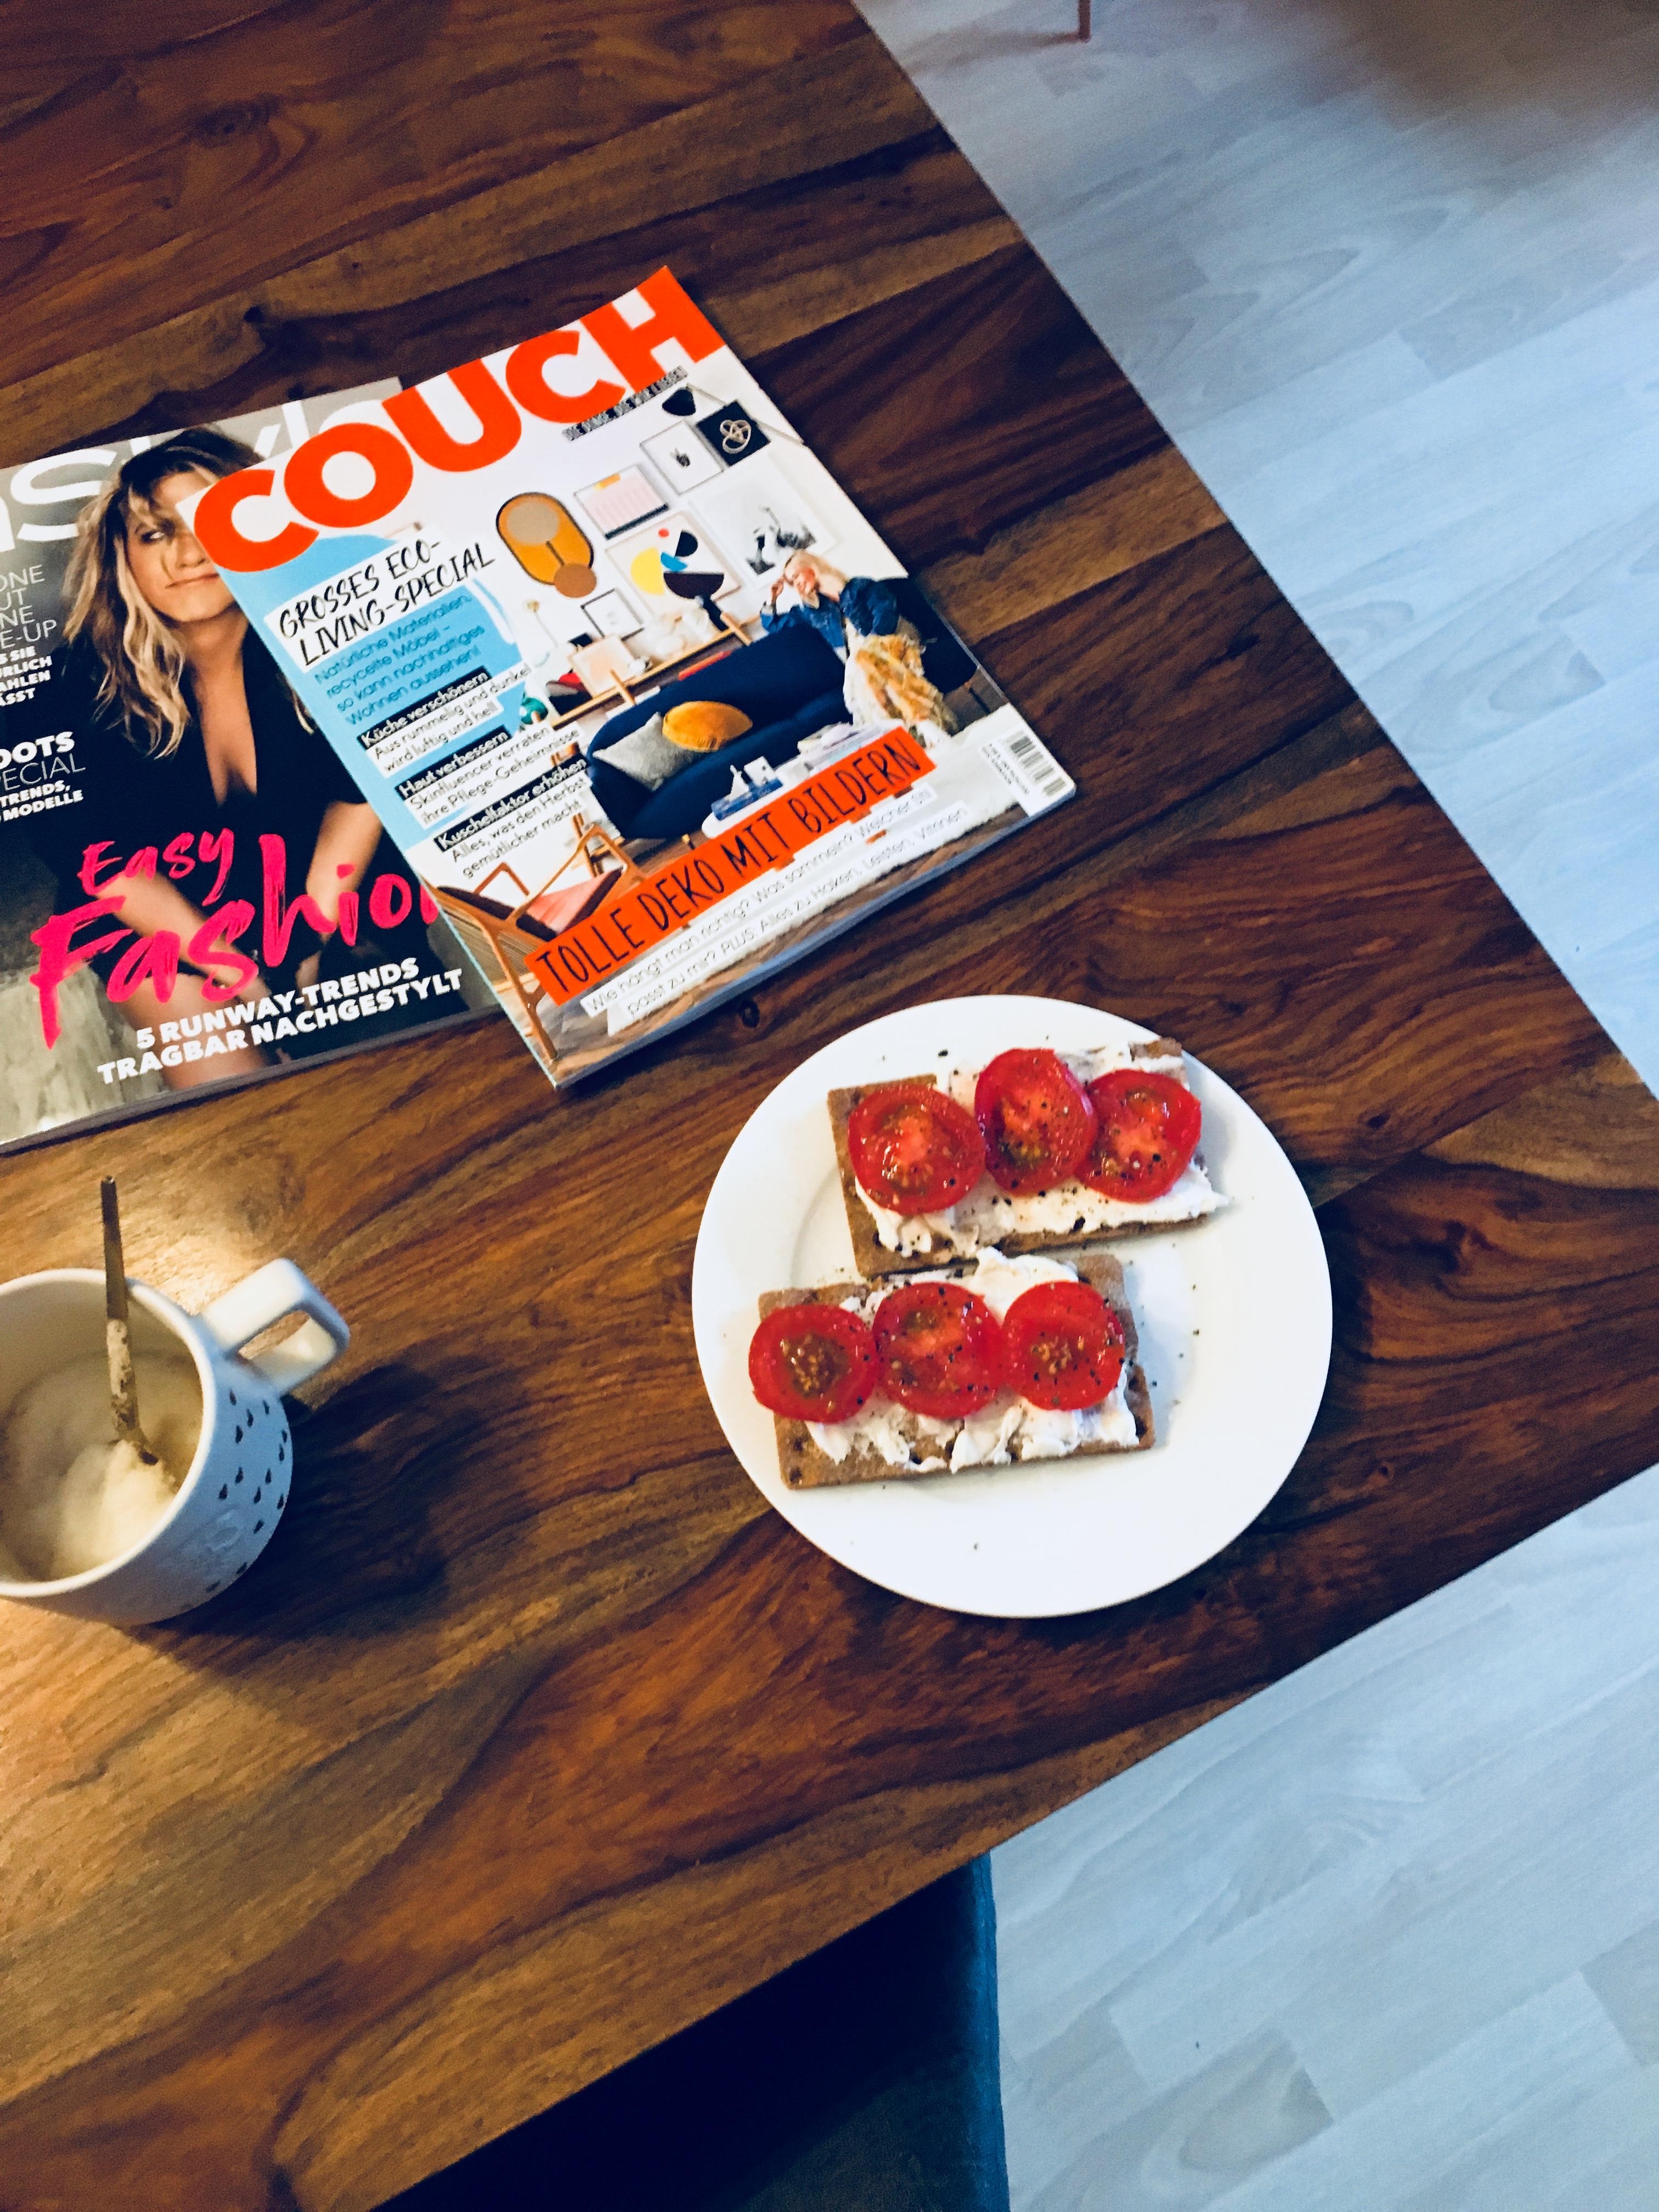 #couchliebt #hygge #coffee #couchstyle #yaay #auszeit #cozy #interiør #moin #nordic #kaffee #magazin #frühstück #morning